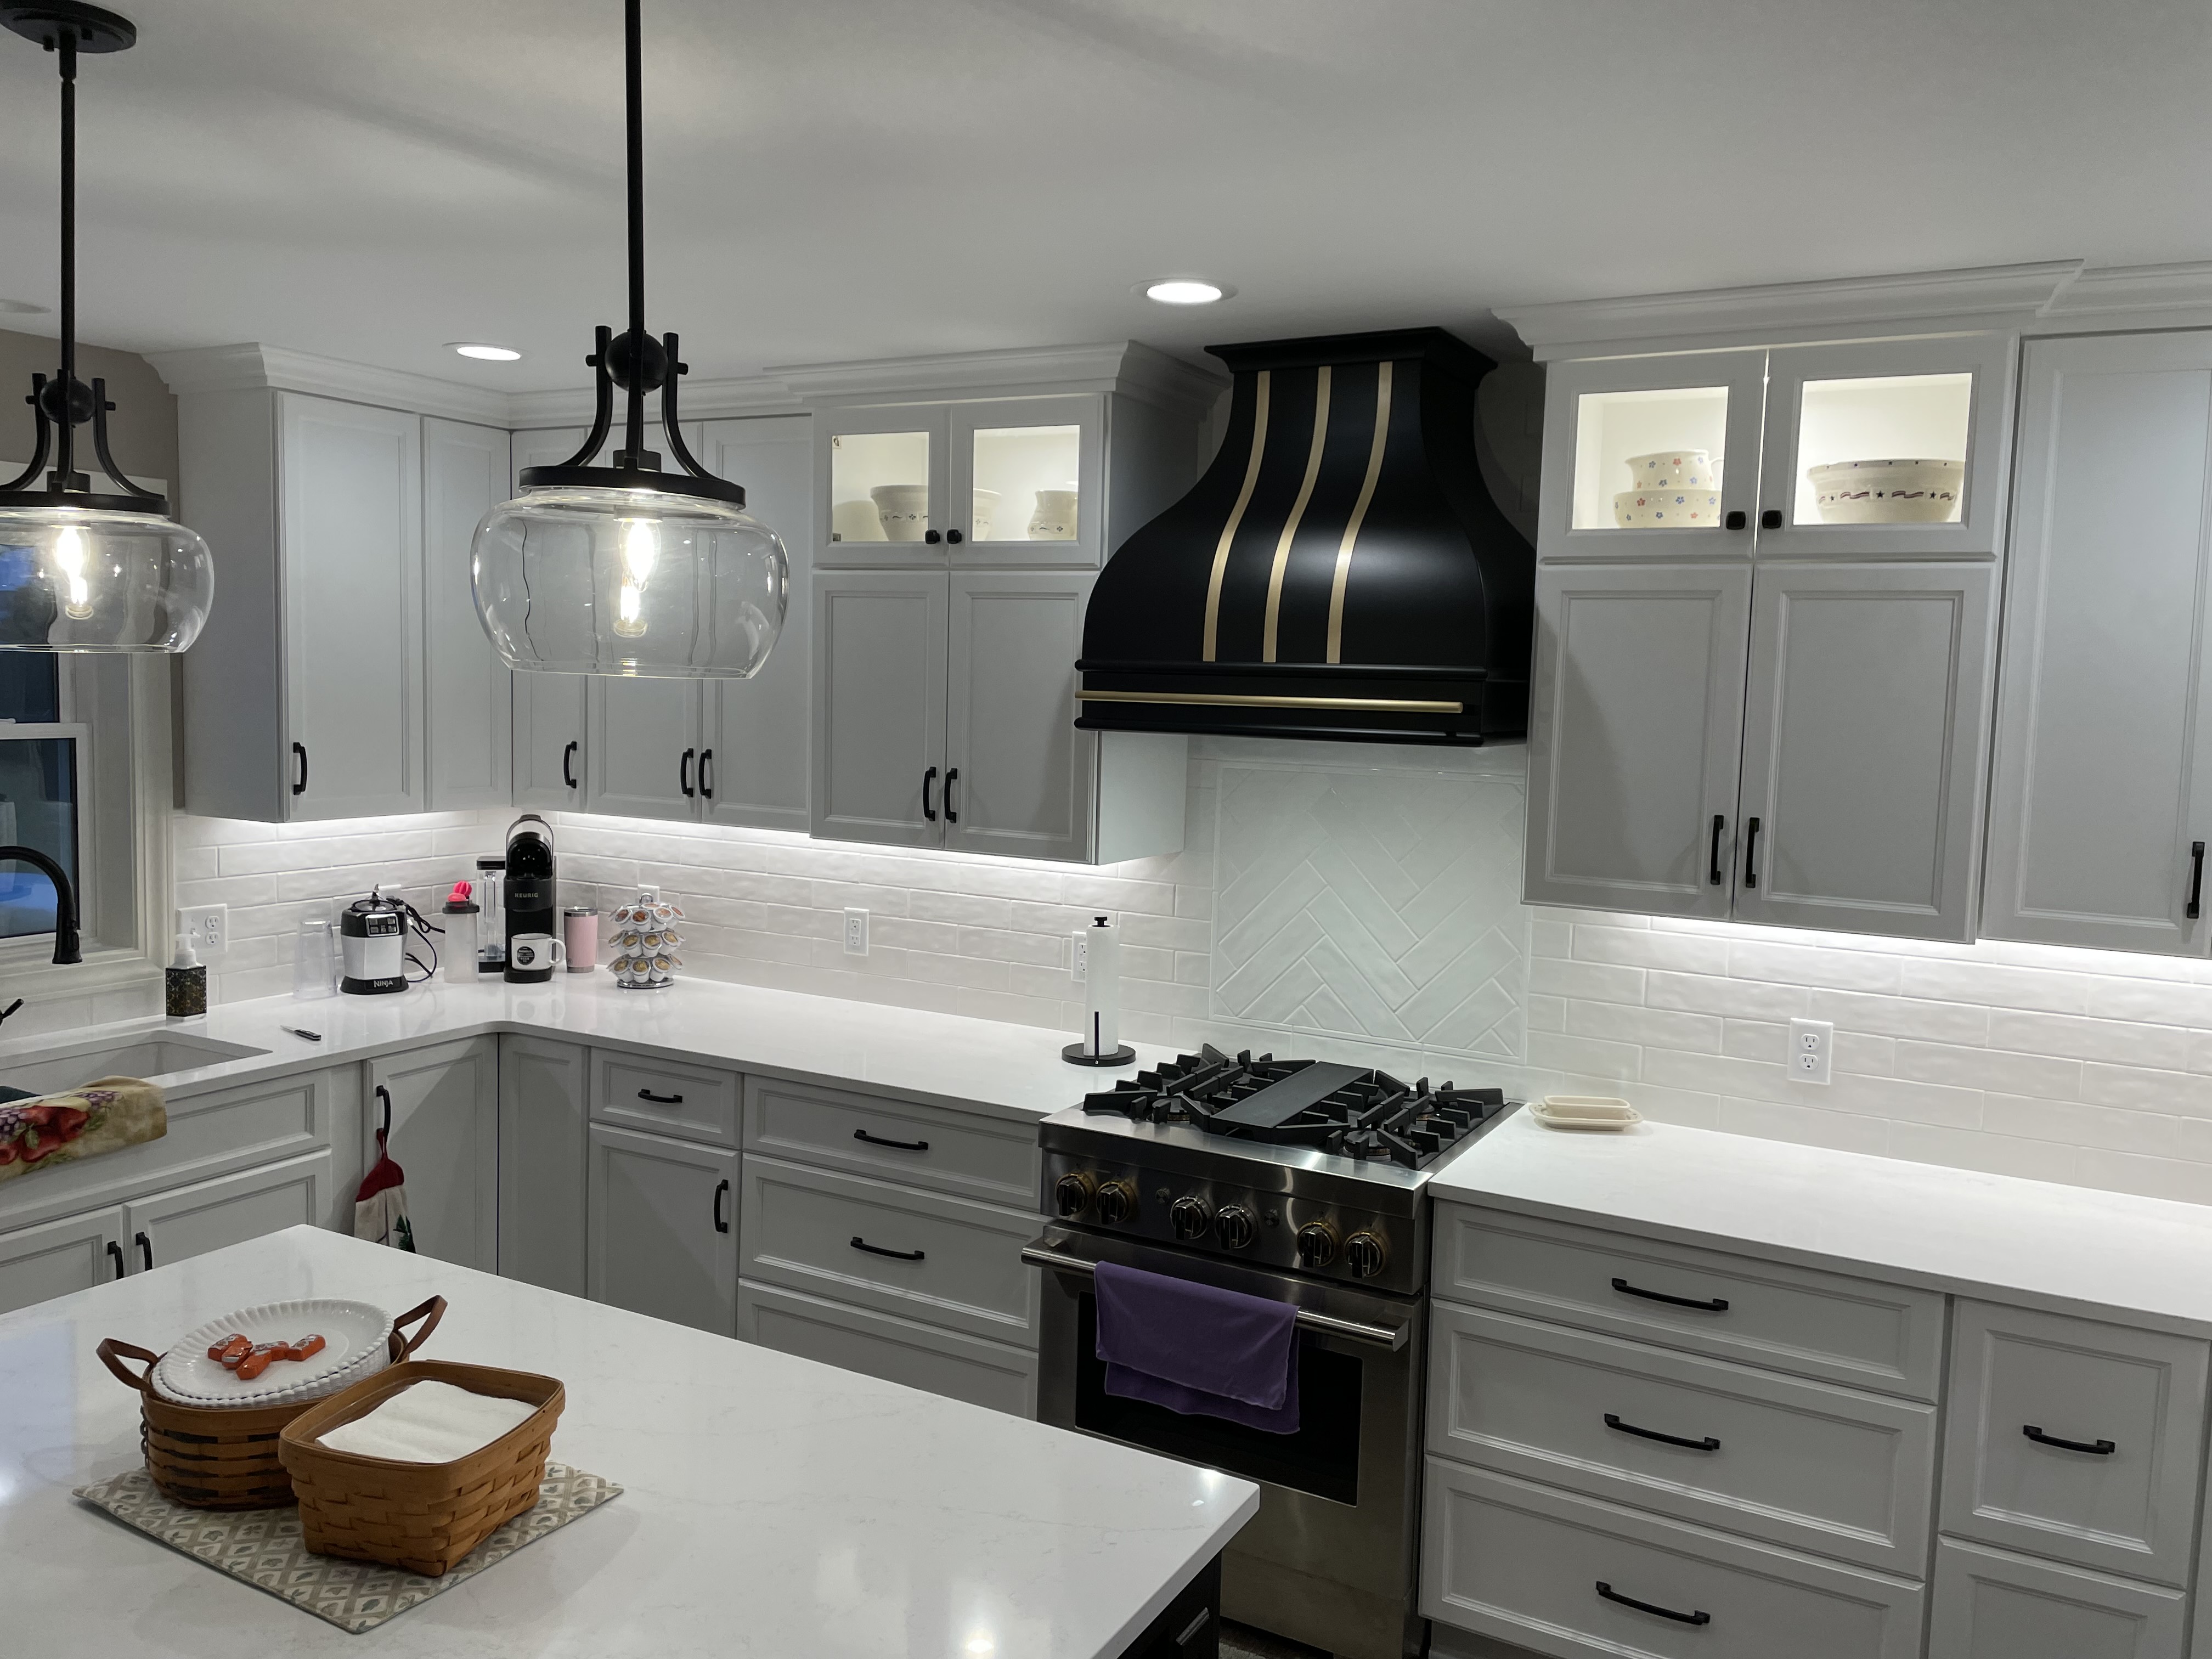 Sleek range hood concepts, craftsman-inspired aesthetics, white kitchen cabinets, marble kitchen countertops, captivating brick backsplash